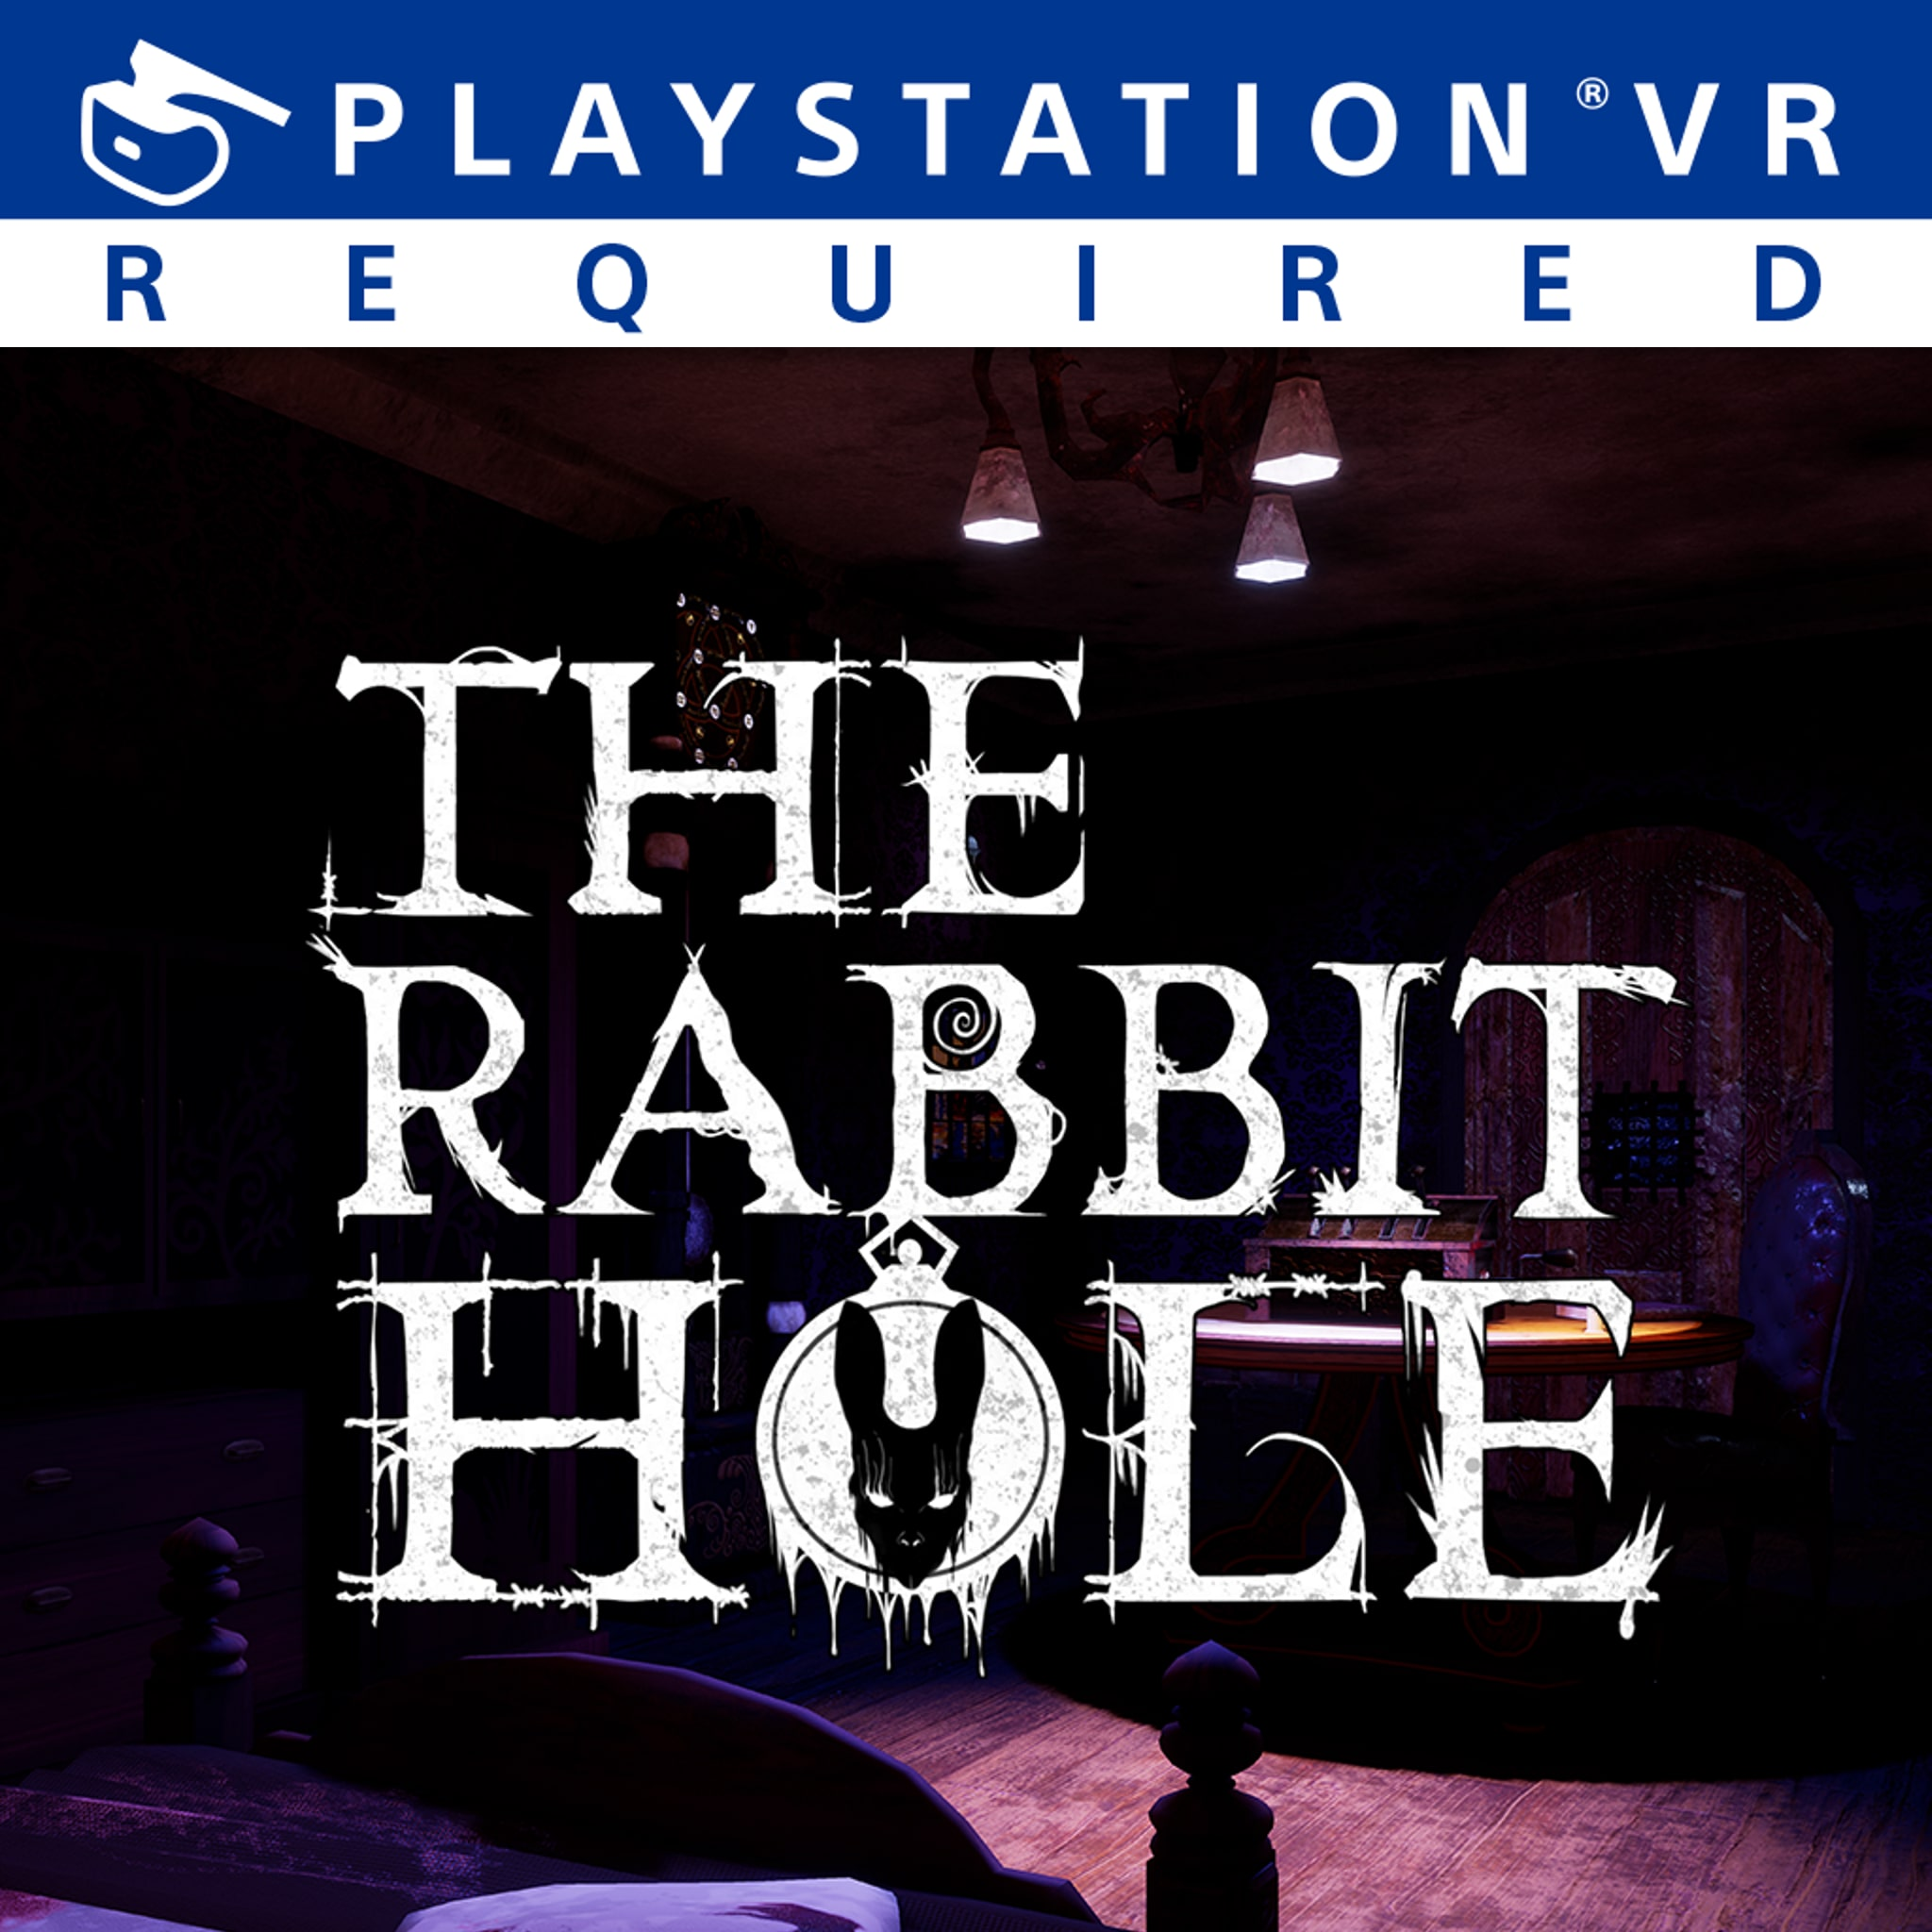 Rabbit hole игра. Down the Rabbit hole (только для PS VR) (ps4) английский язык. Down the Rabbit hole ps4. Down the Rabbit hole VR.